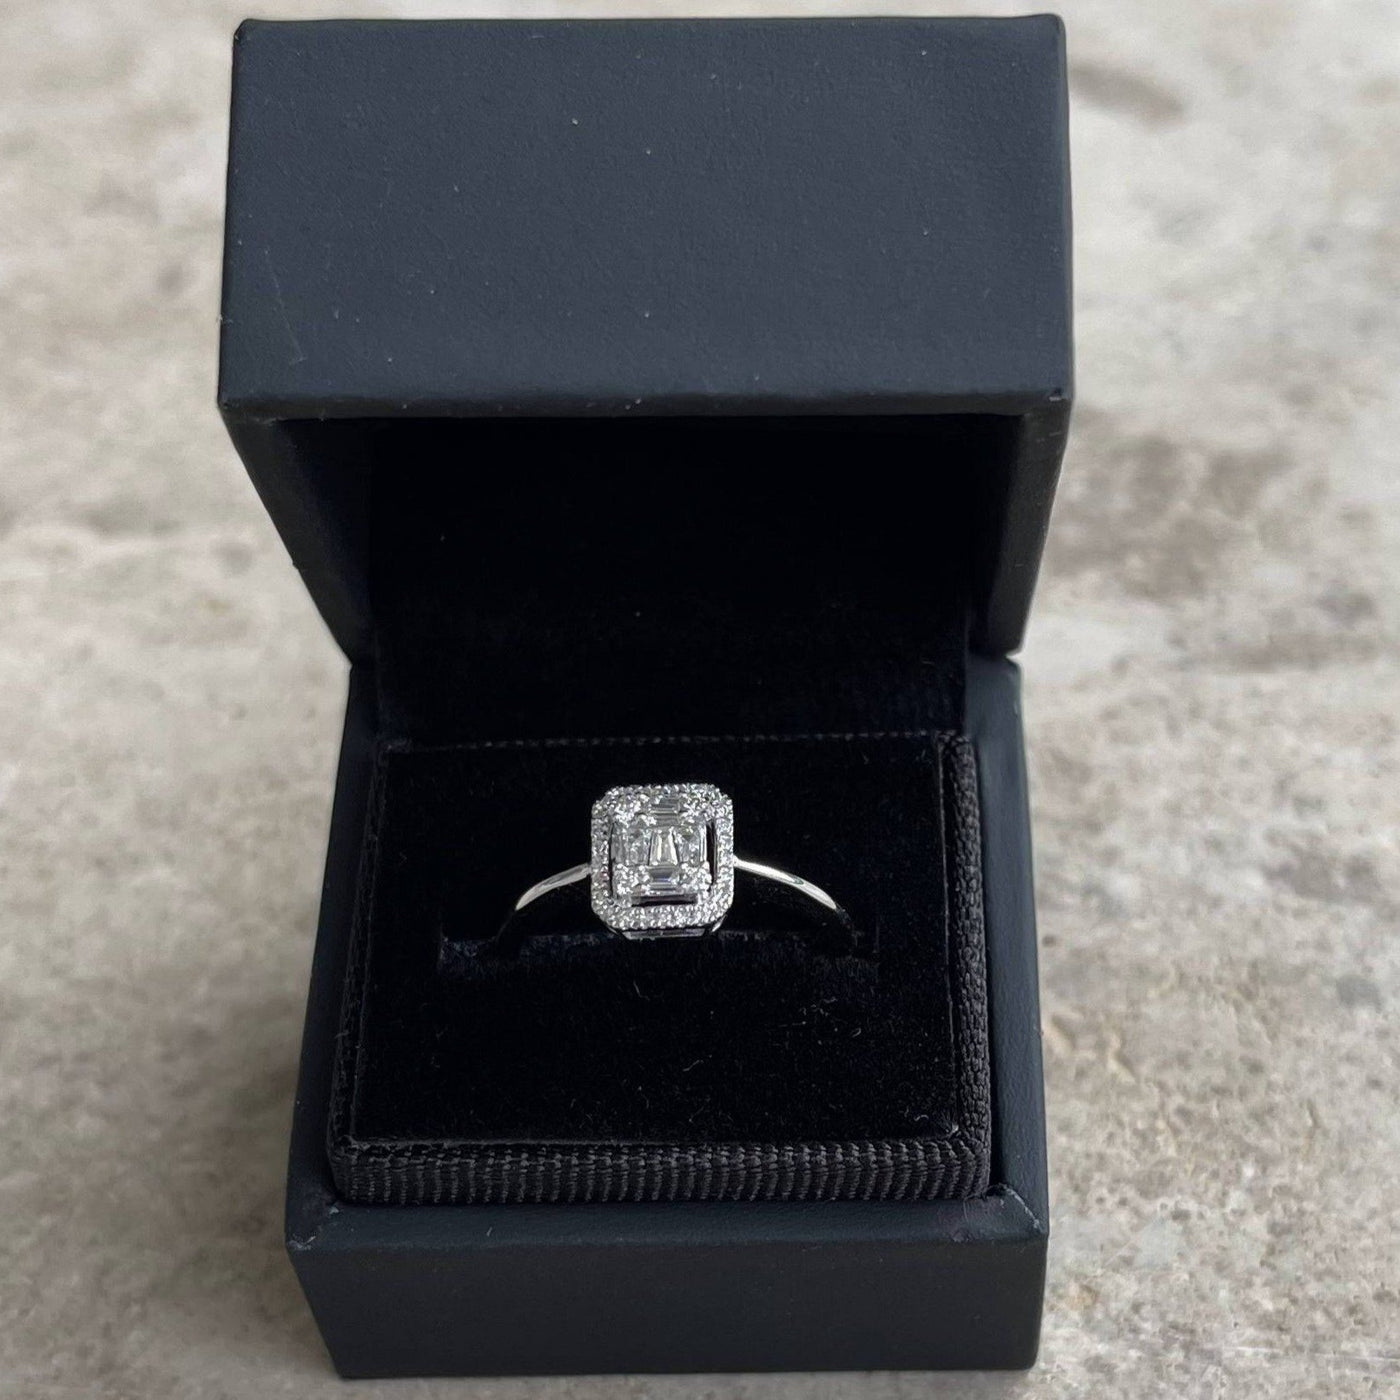 'Candice' 18CT White Gold Diamond Ring